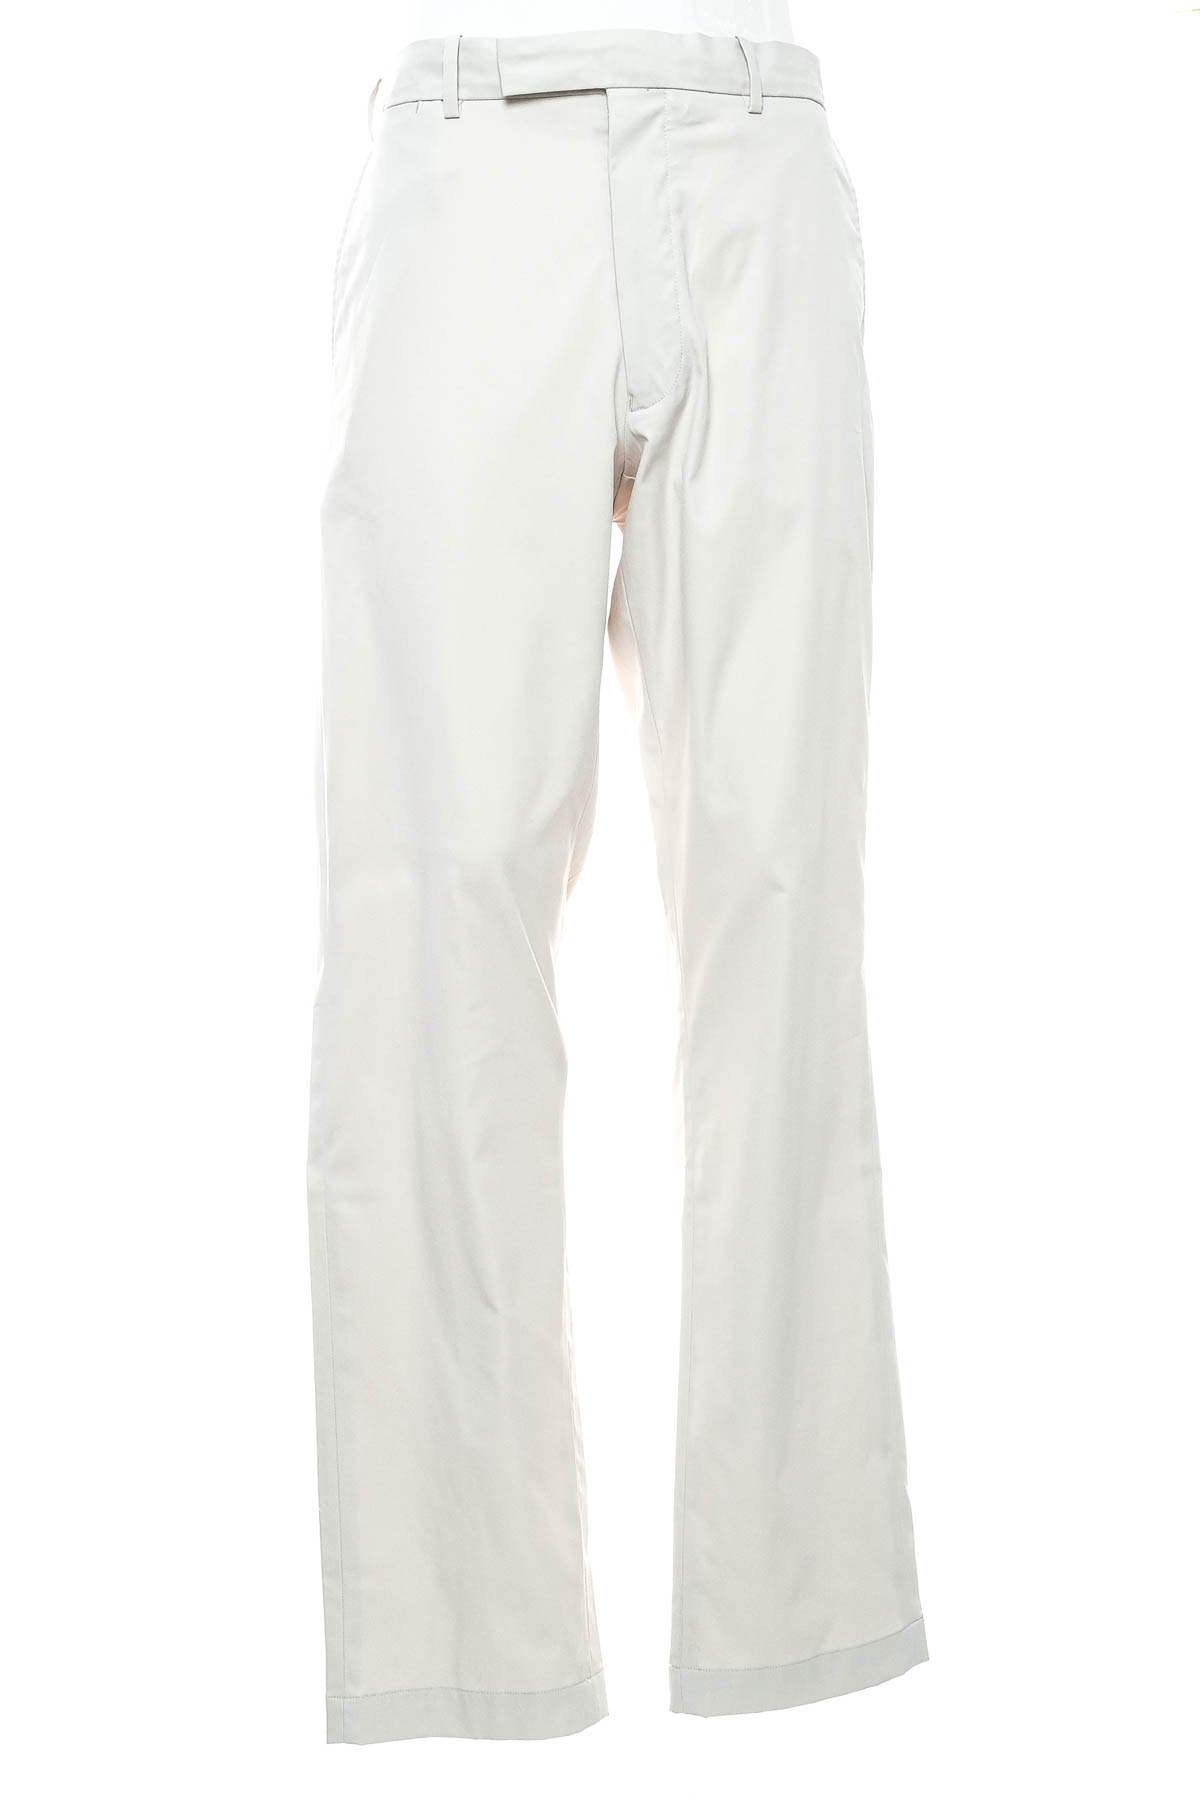 Pantalon pentru bărbați - RLX x Ralph Lauren - 0